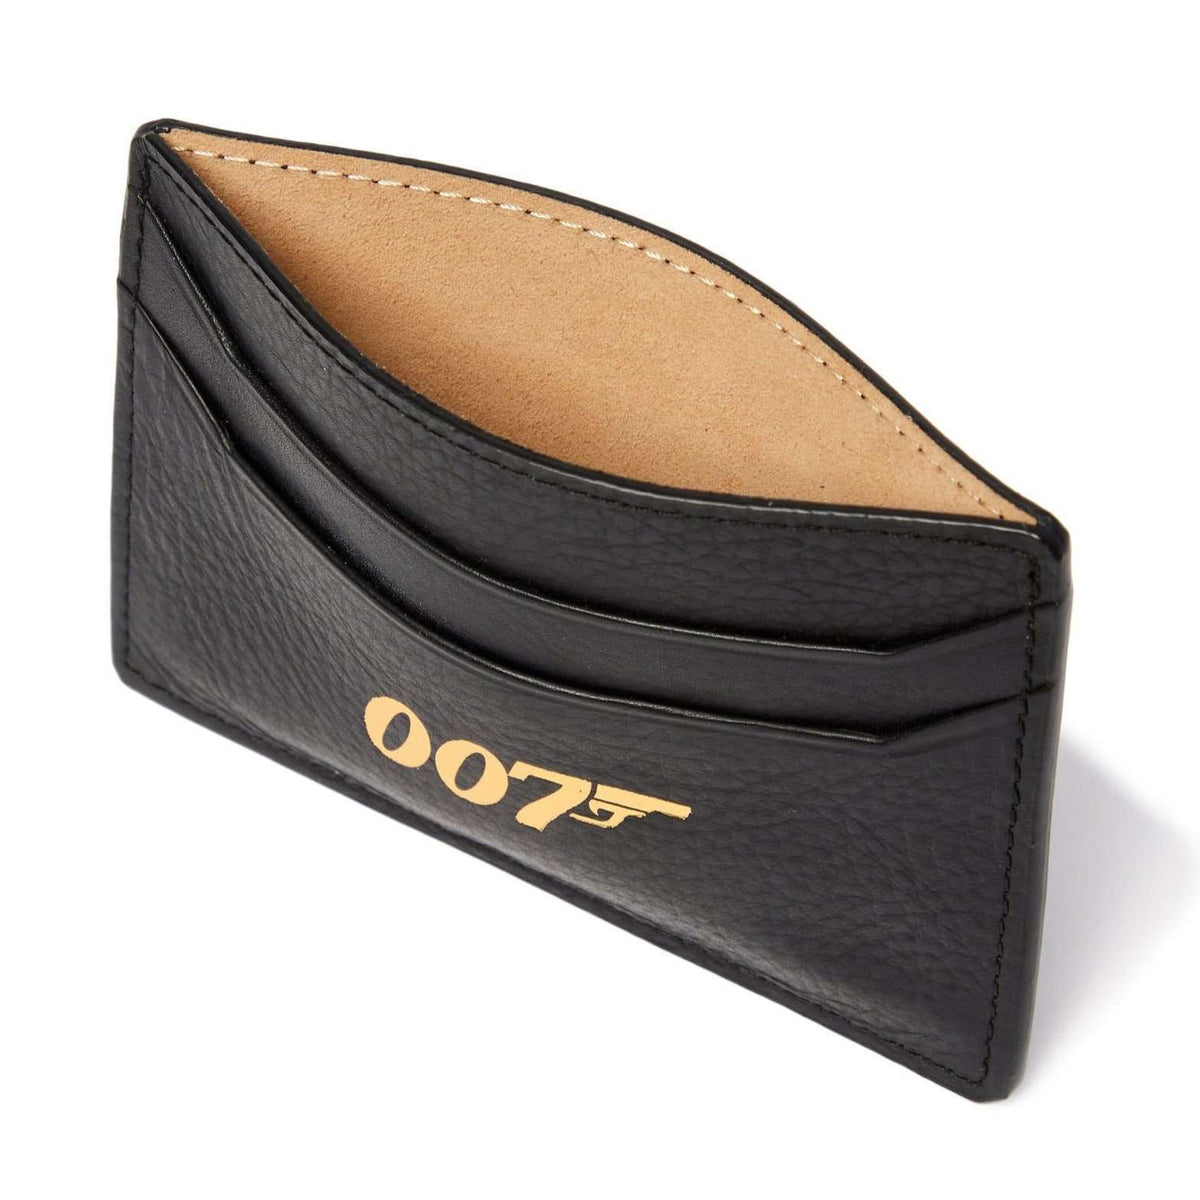 007 Personalised Pebble-grain Leather Card Holder in Black WALLET Plinth 